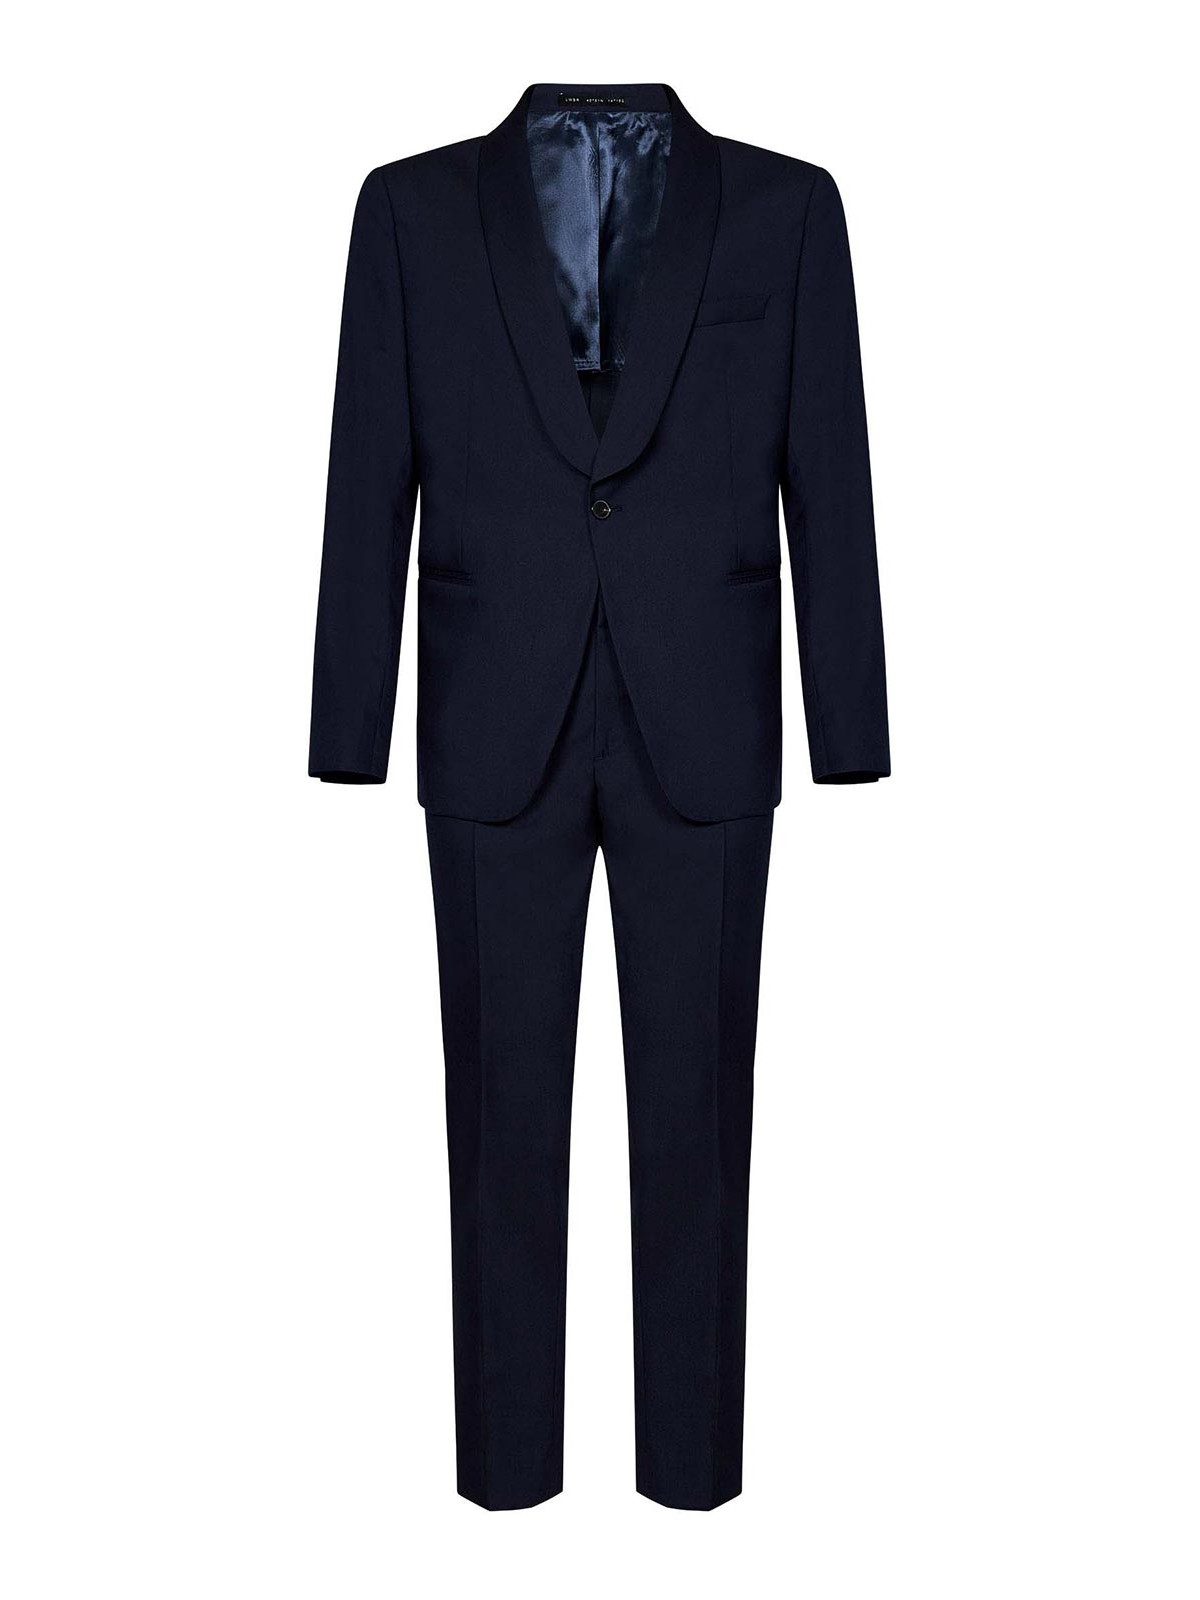 Low Brand Navy Blue Tropical Virgin Wool Evening Suit